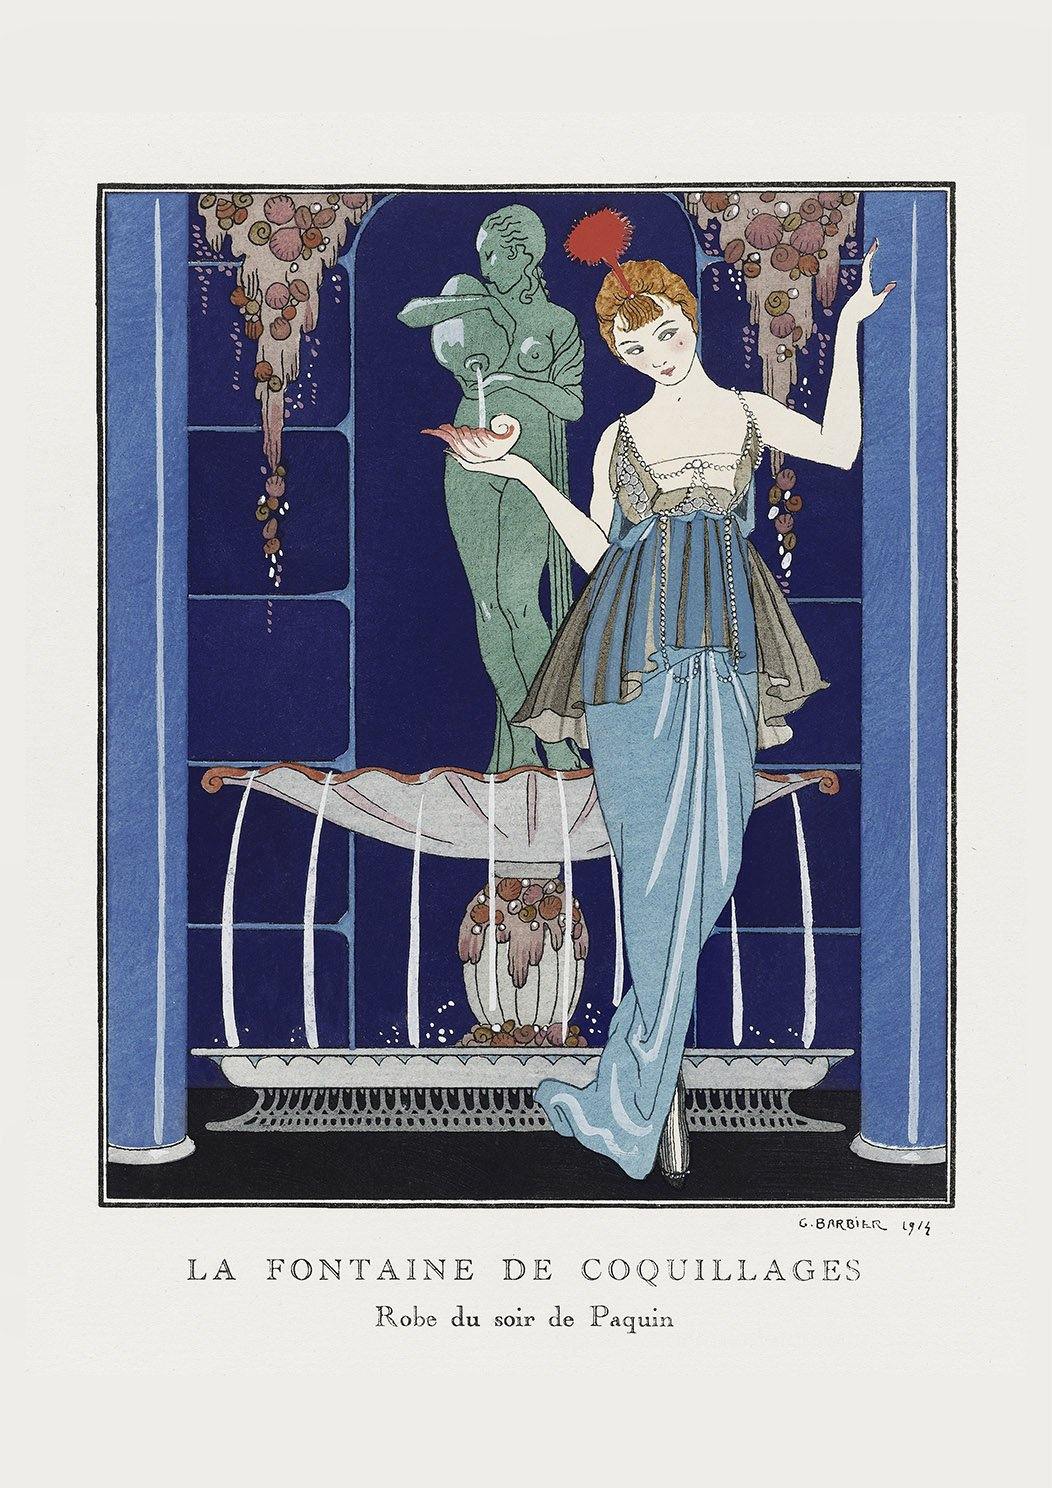 GEORGE BARBIER PRINT: La Fontaine de Coquillages with Paquin Dress - Pimlico Prints